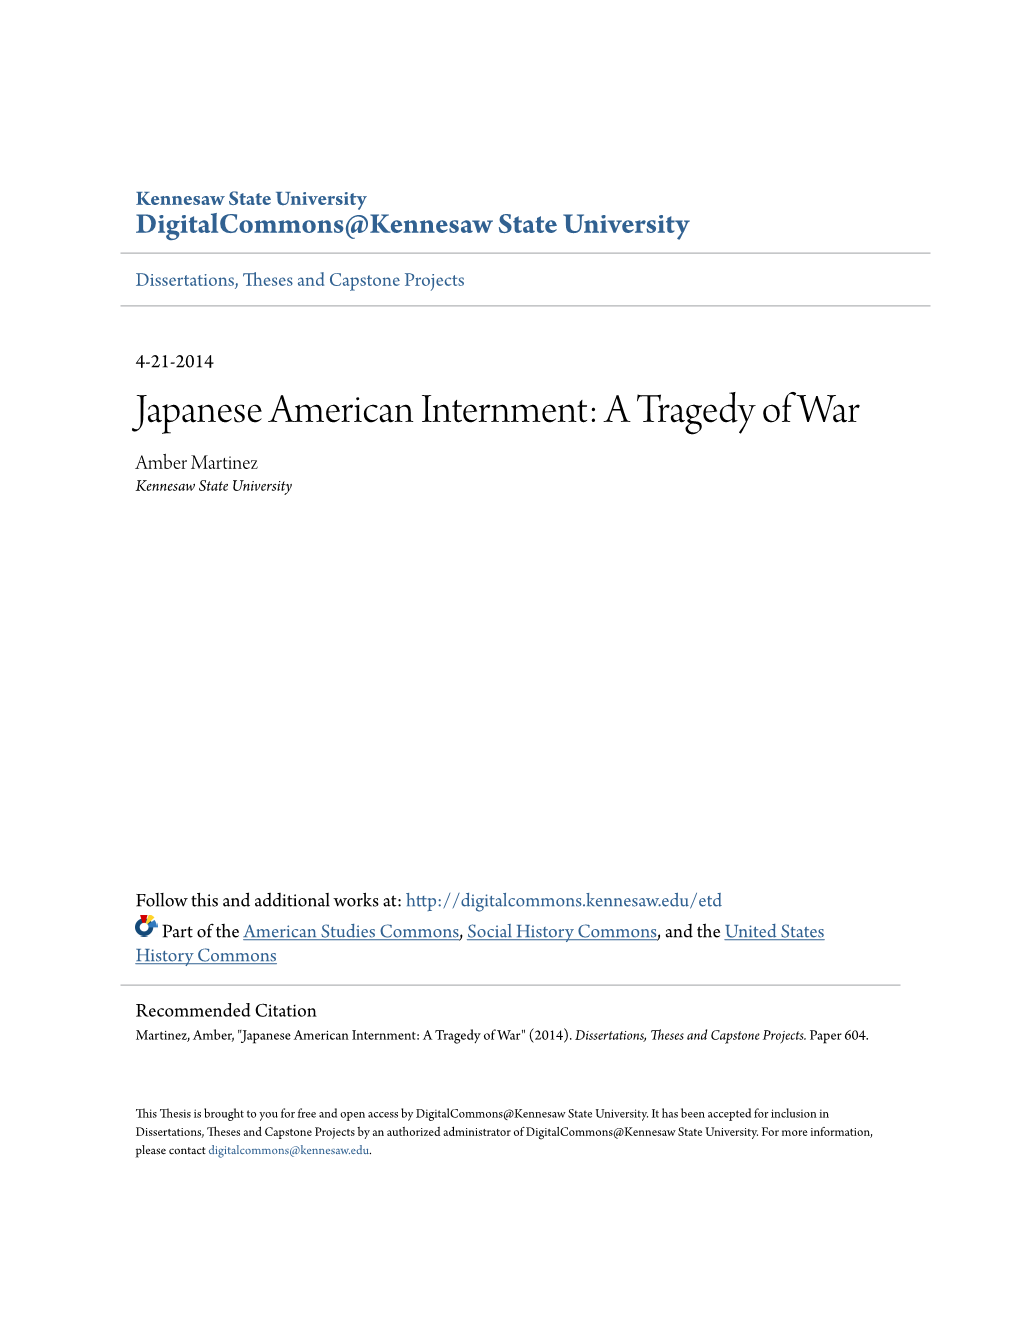 Japanese American Internment: a Tragedy of War Amber Martinez Kennesaw State University